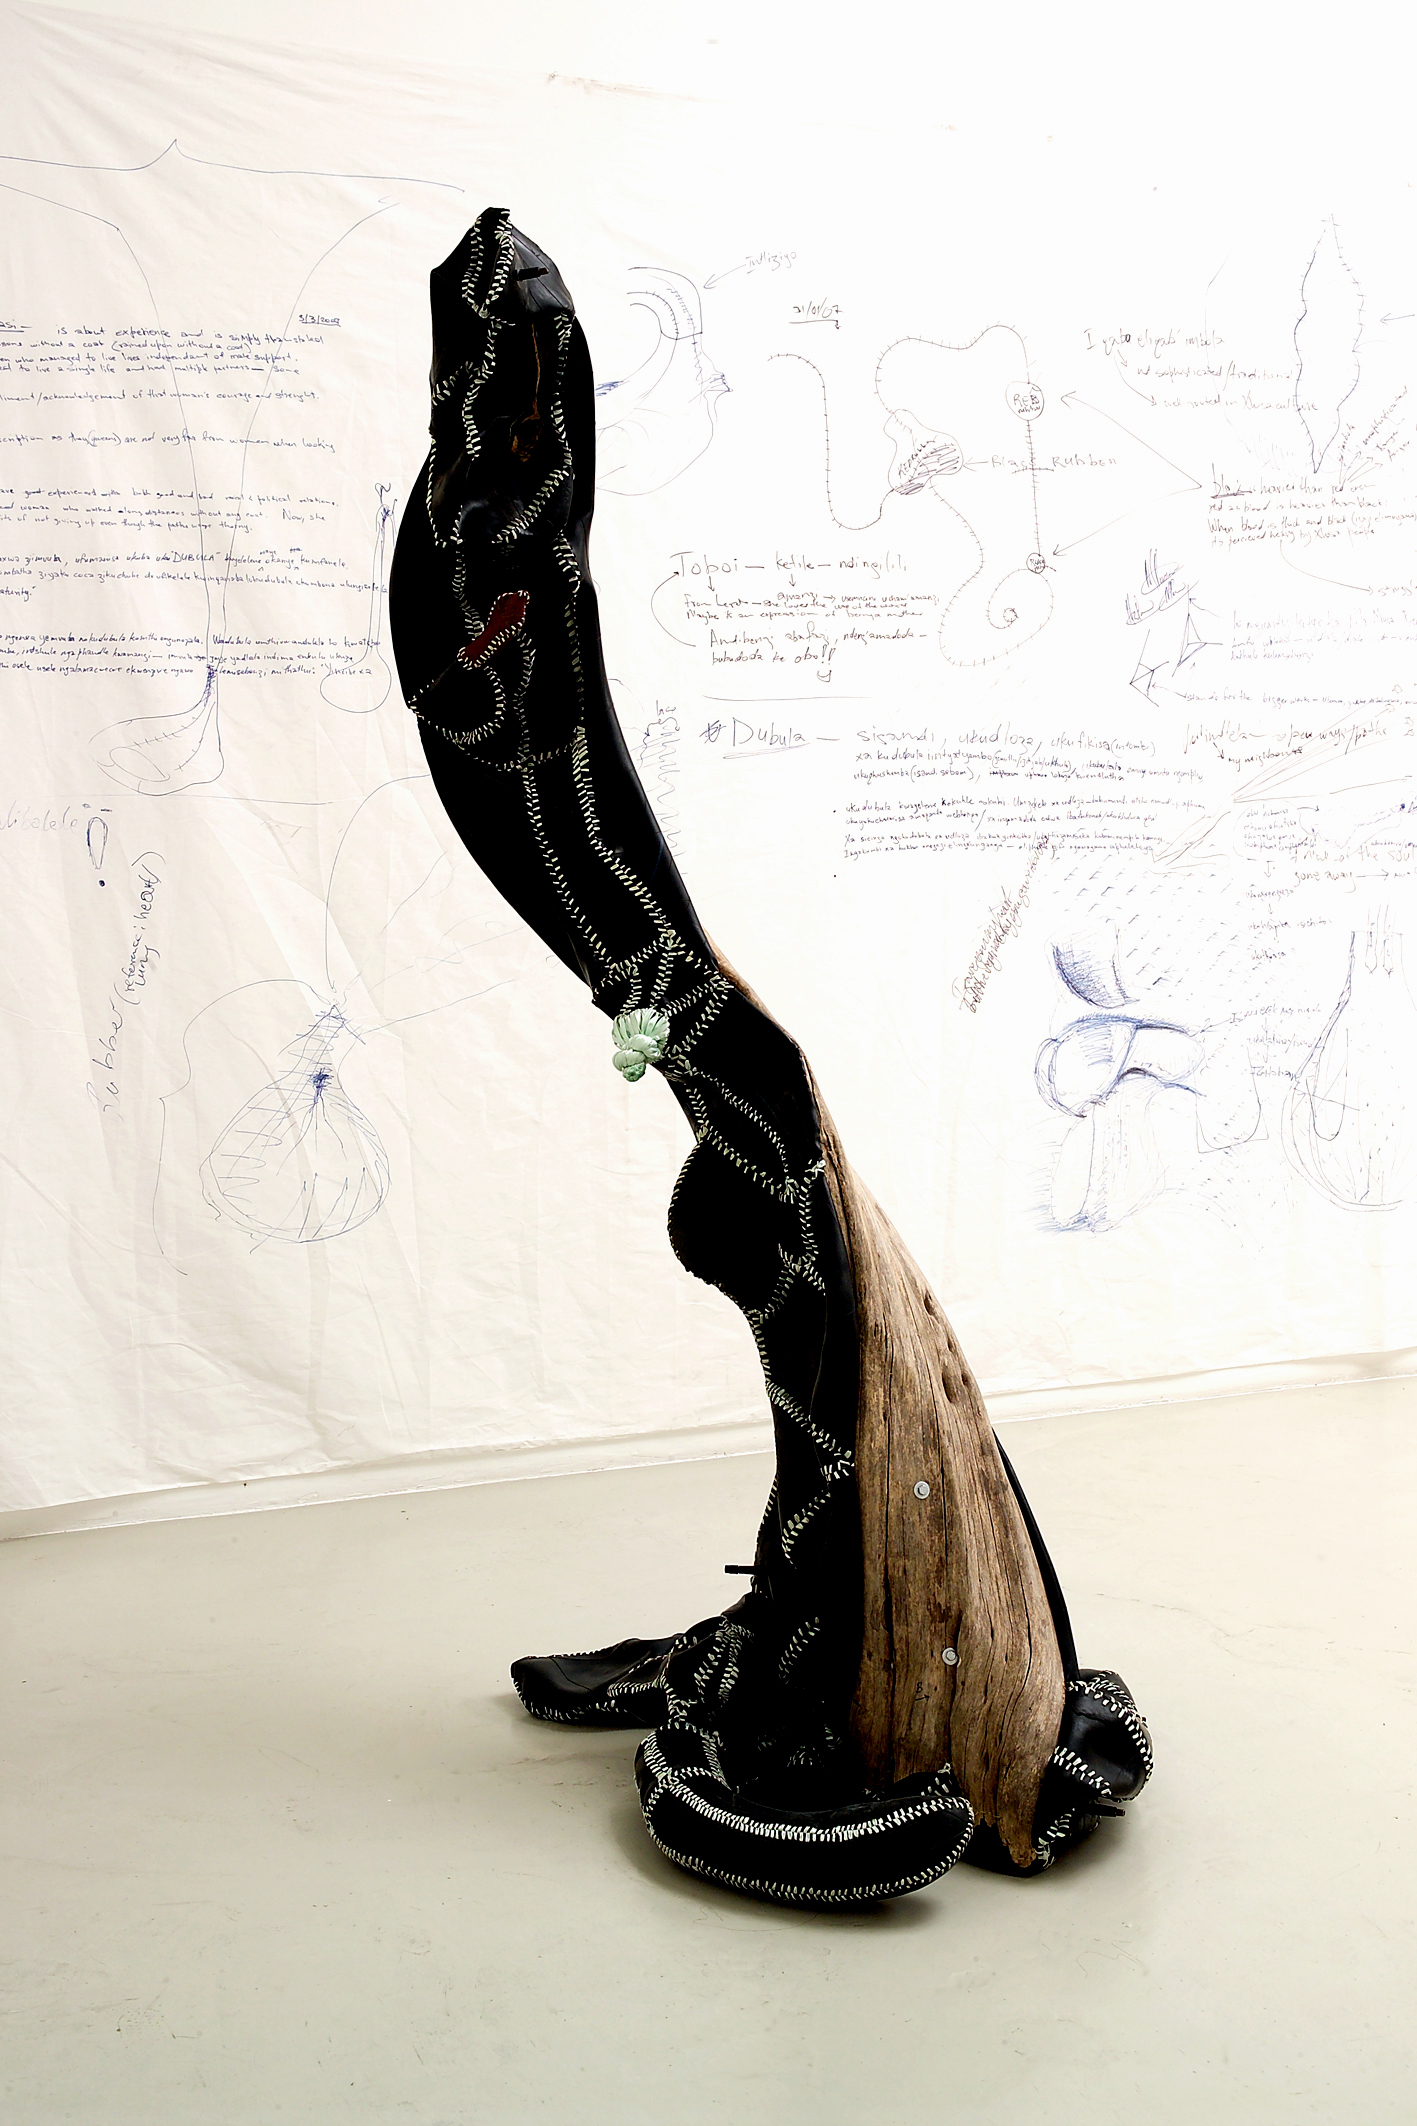 Nicholas Hlobo, Umakadenethwa, 2004-2007, legno, nastro e camera d'aria, cm h 190. Collezione Bianca Attolico. Courtesy Extraspazio - Roma